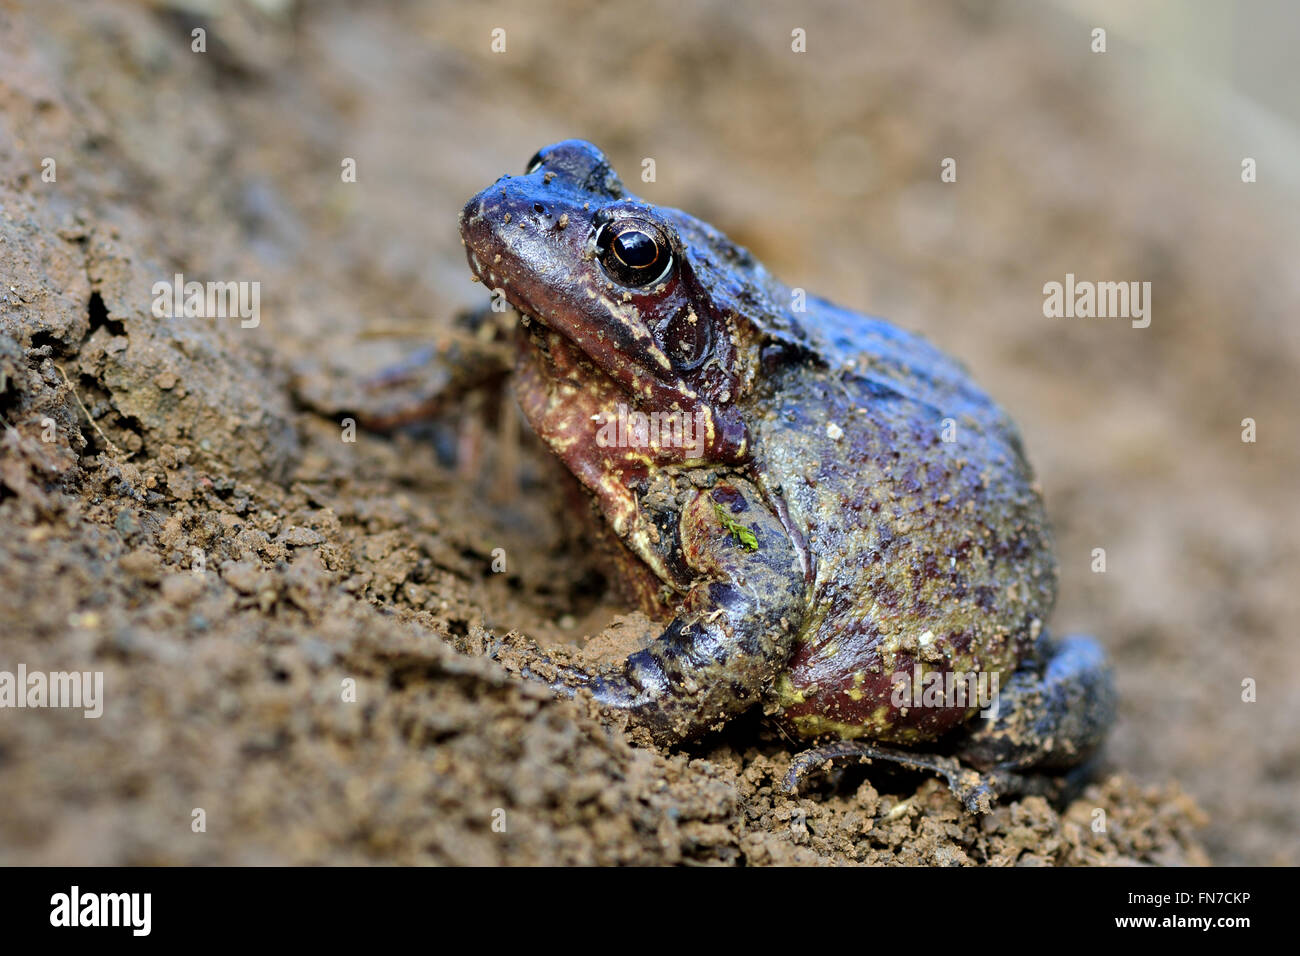 Common frog (Rana temporaria). Colourful amphibian in the family Ranidae, gravid female ready to lay eggs Stock Photo